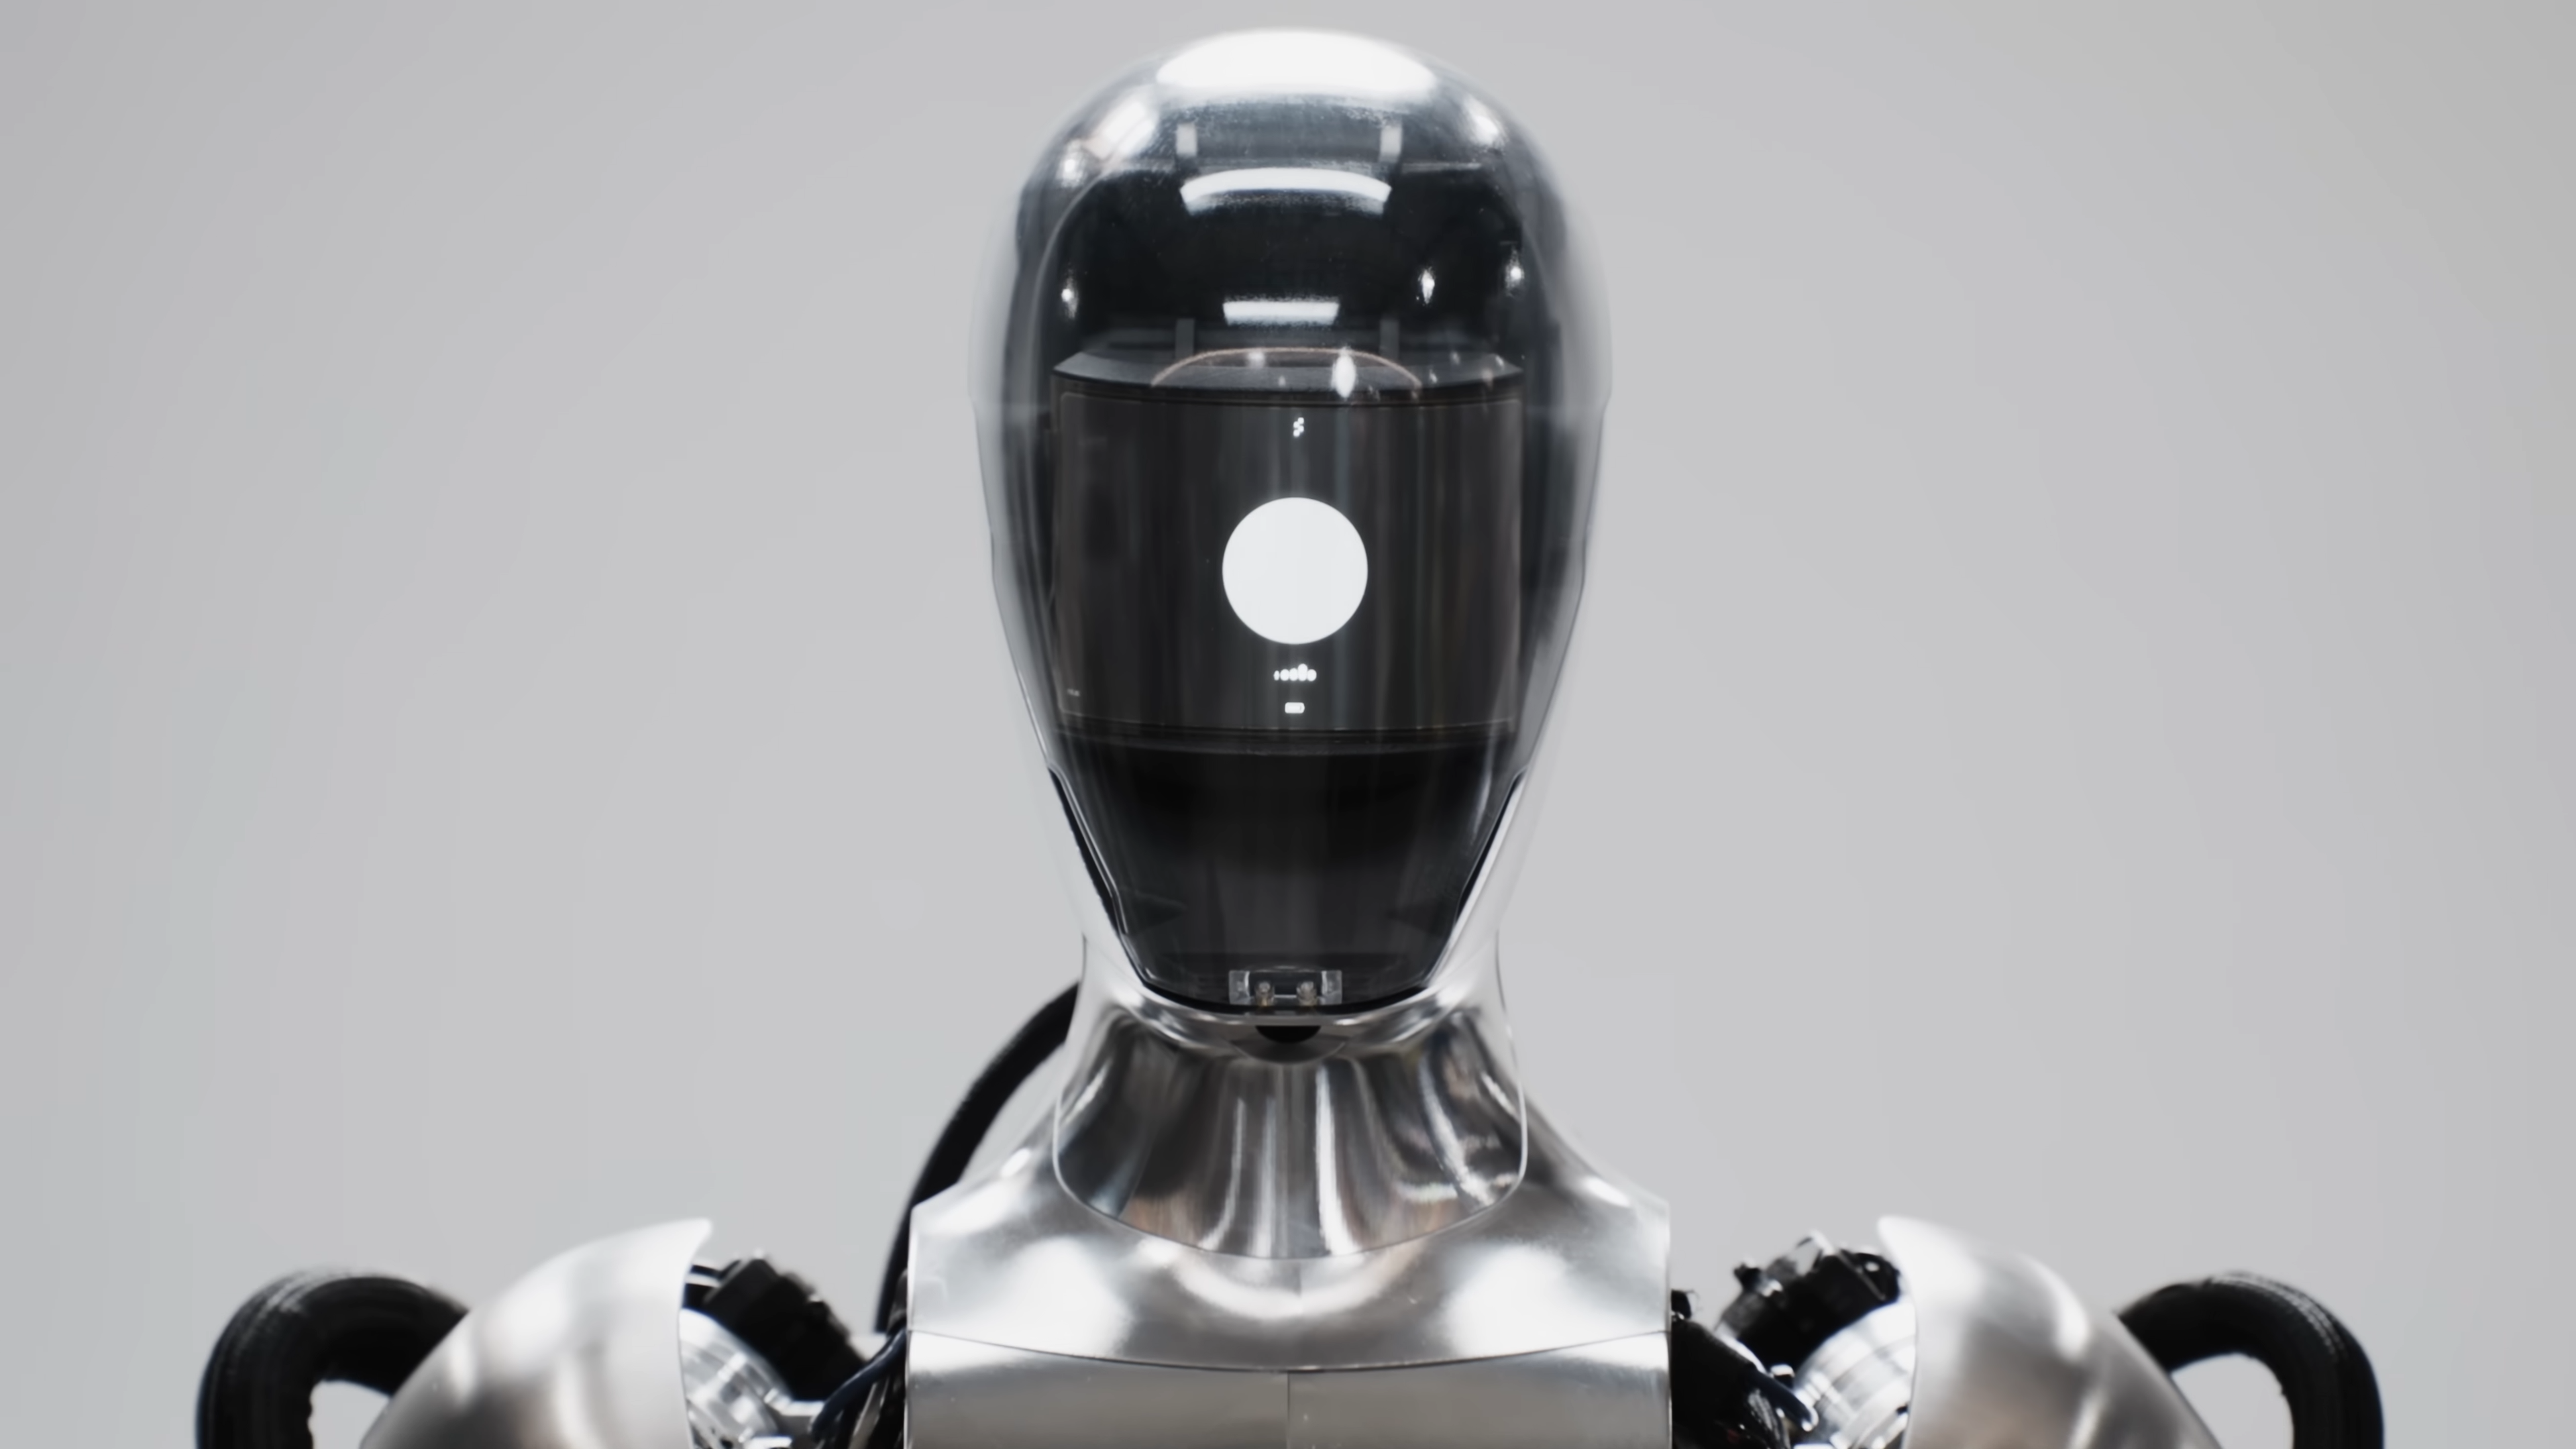 Roboter kann dank OpenAI-Modellen sprechen und handeln